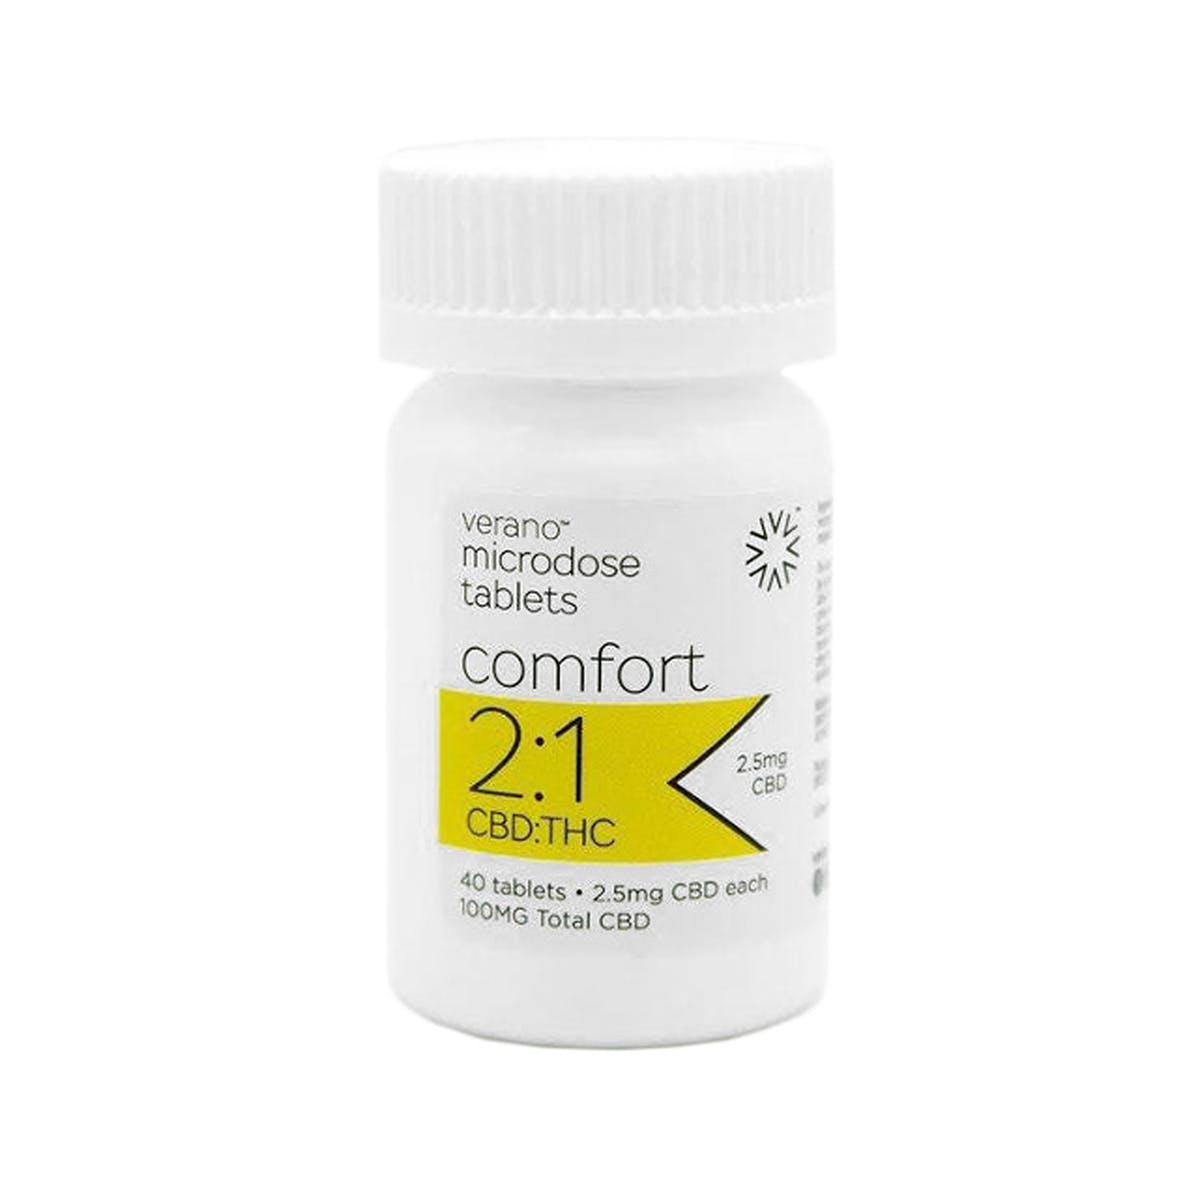 Microdose Tablets - Comfort 2:1 CBD/THC